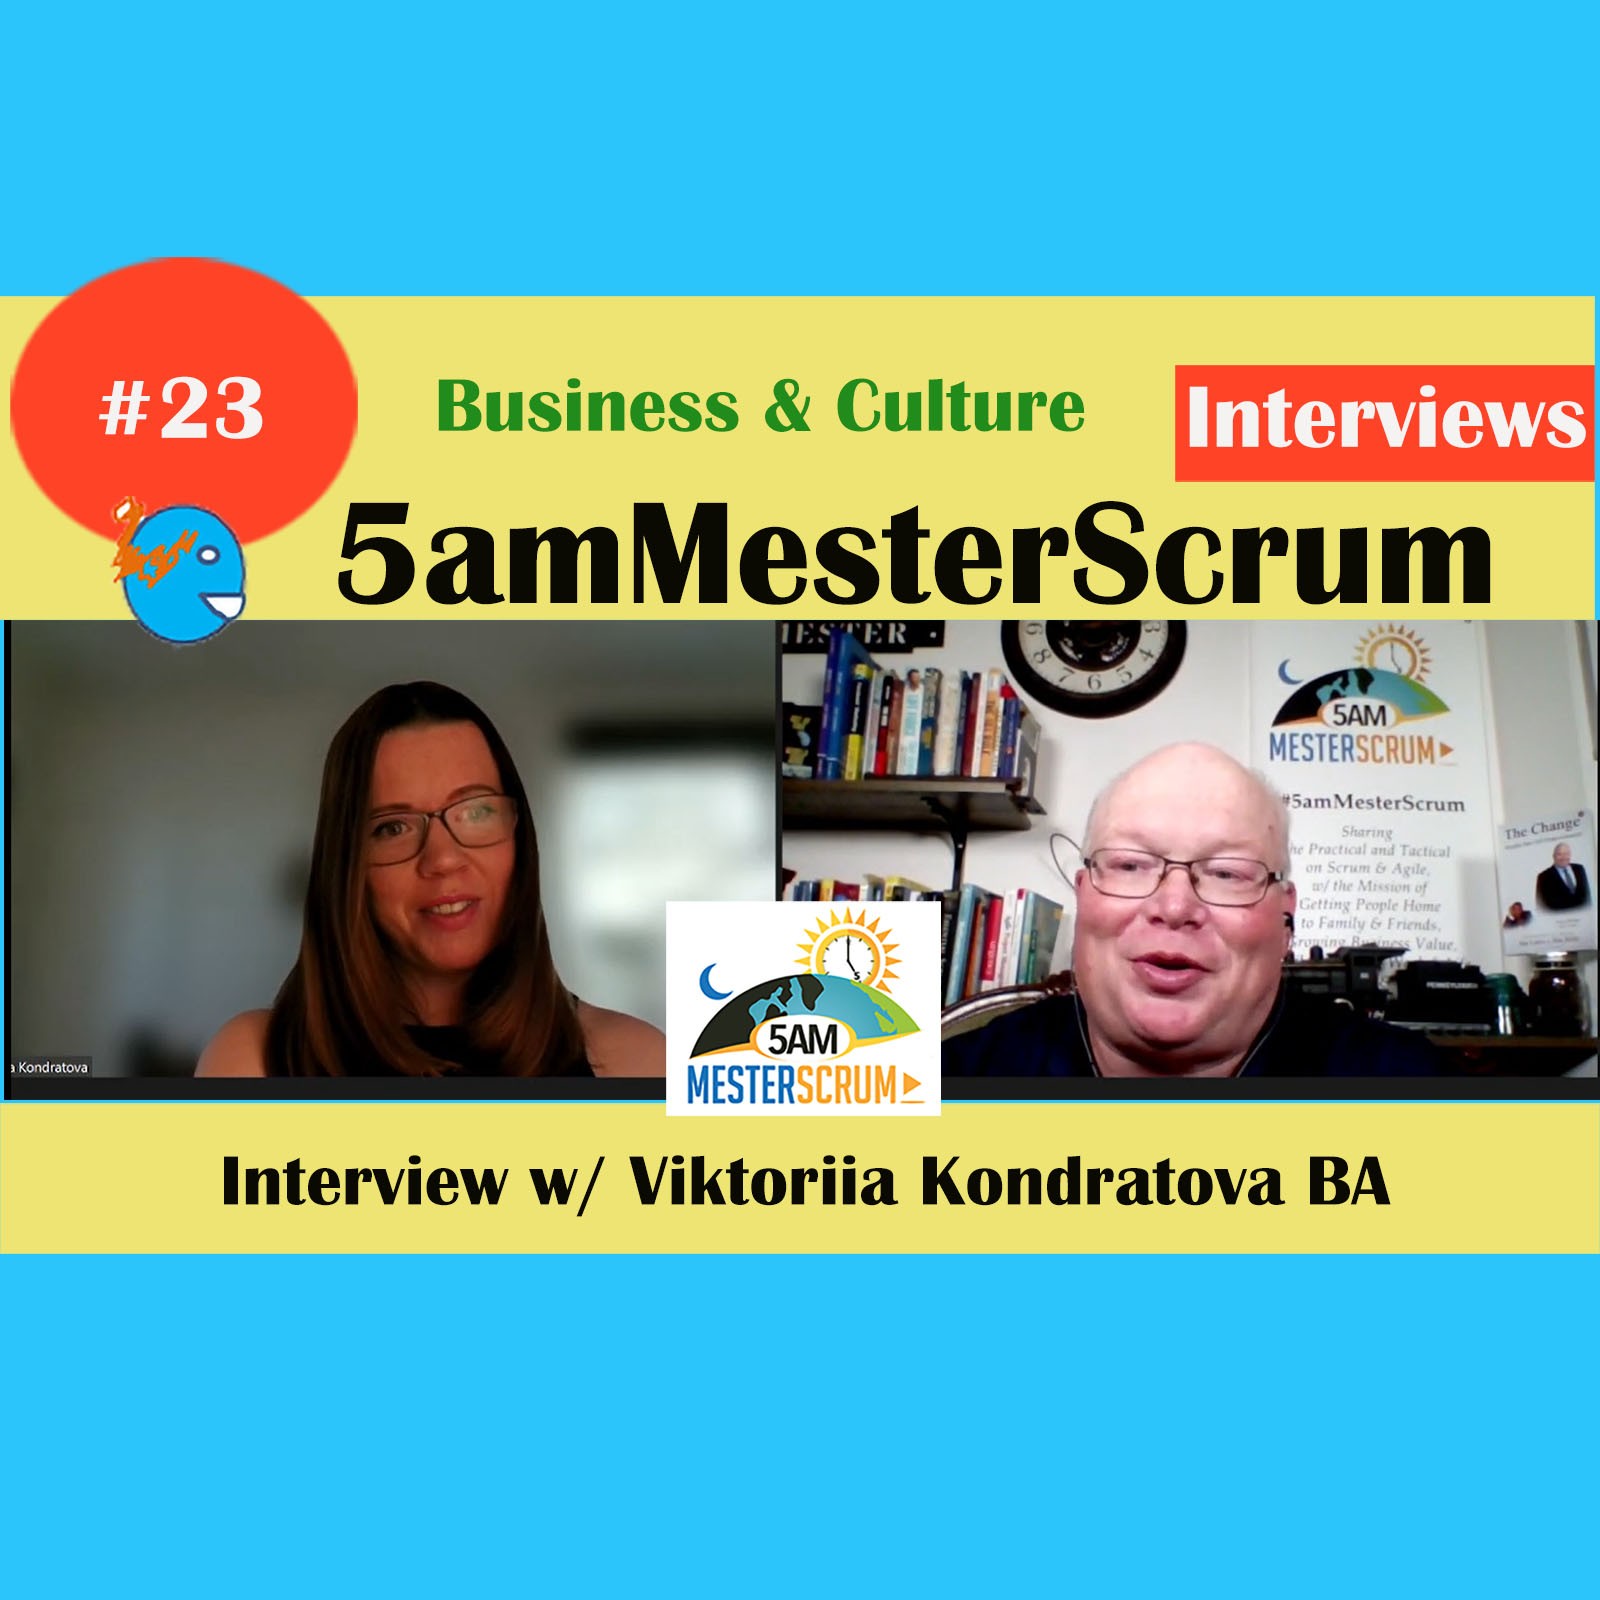 Viktoriia Kondratova Interview 23 Thursday Nights #5amMesterScrum